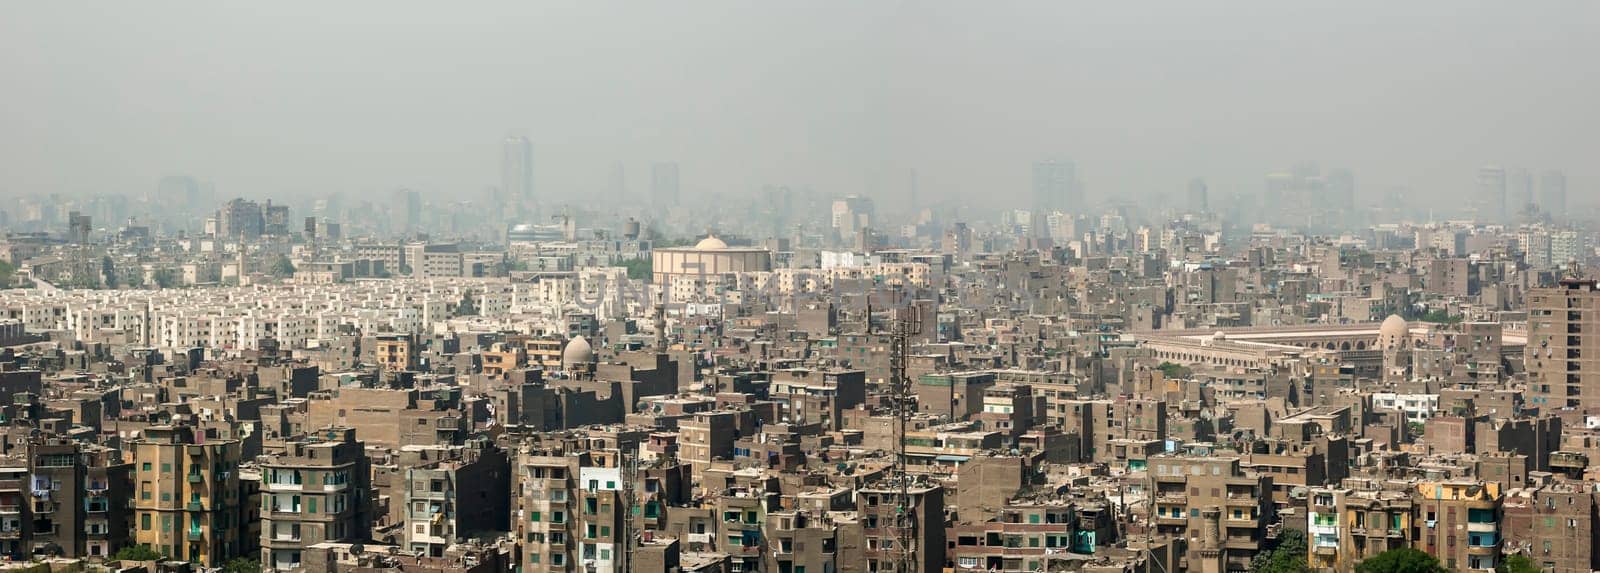 Cairo, Egypt - April 14 2008: Panoramic view of Cairo, Egypt.